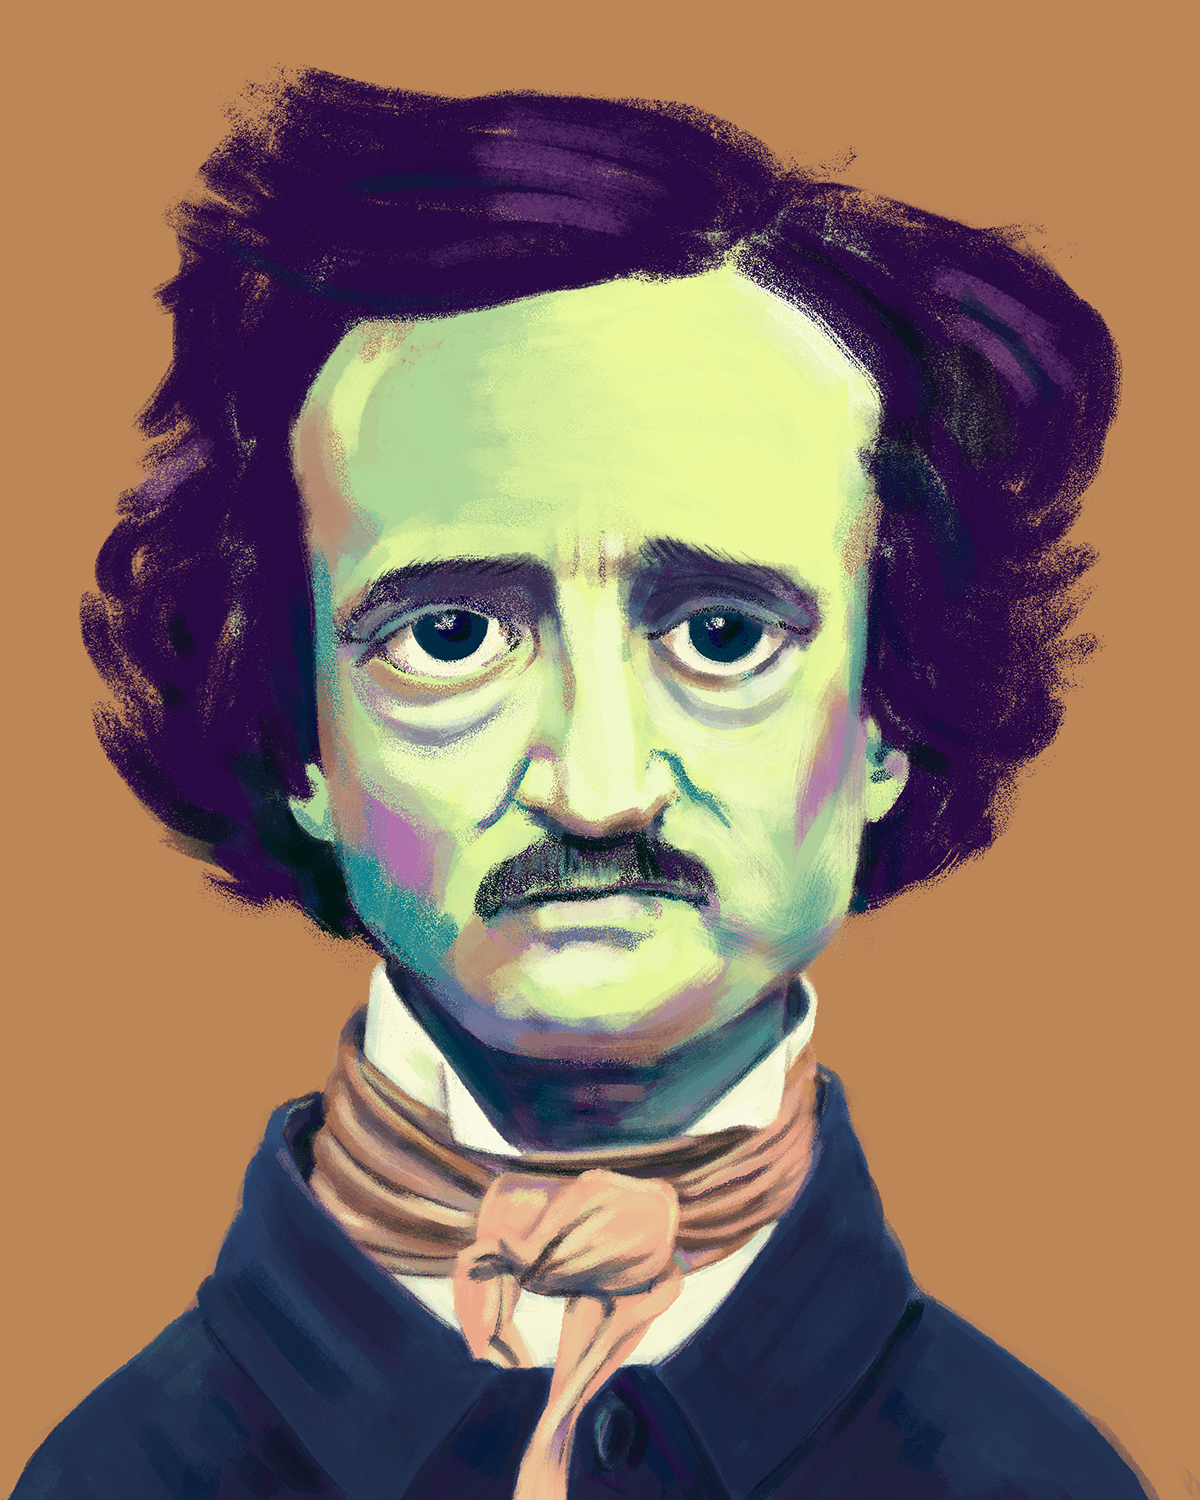 A colorful portrait of Edgar Allan Poe.